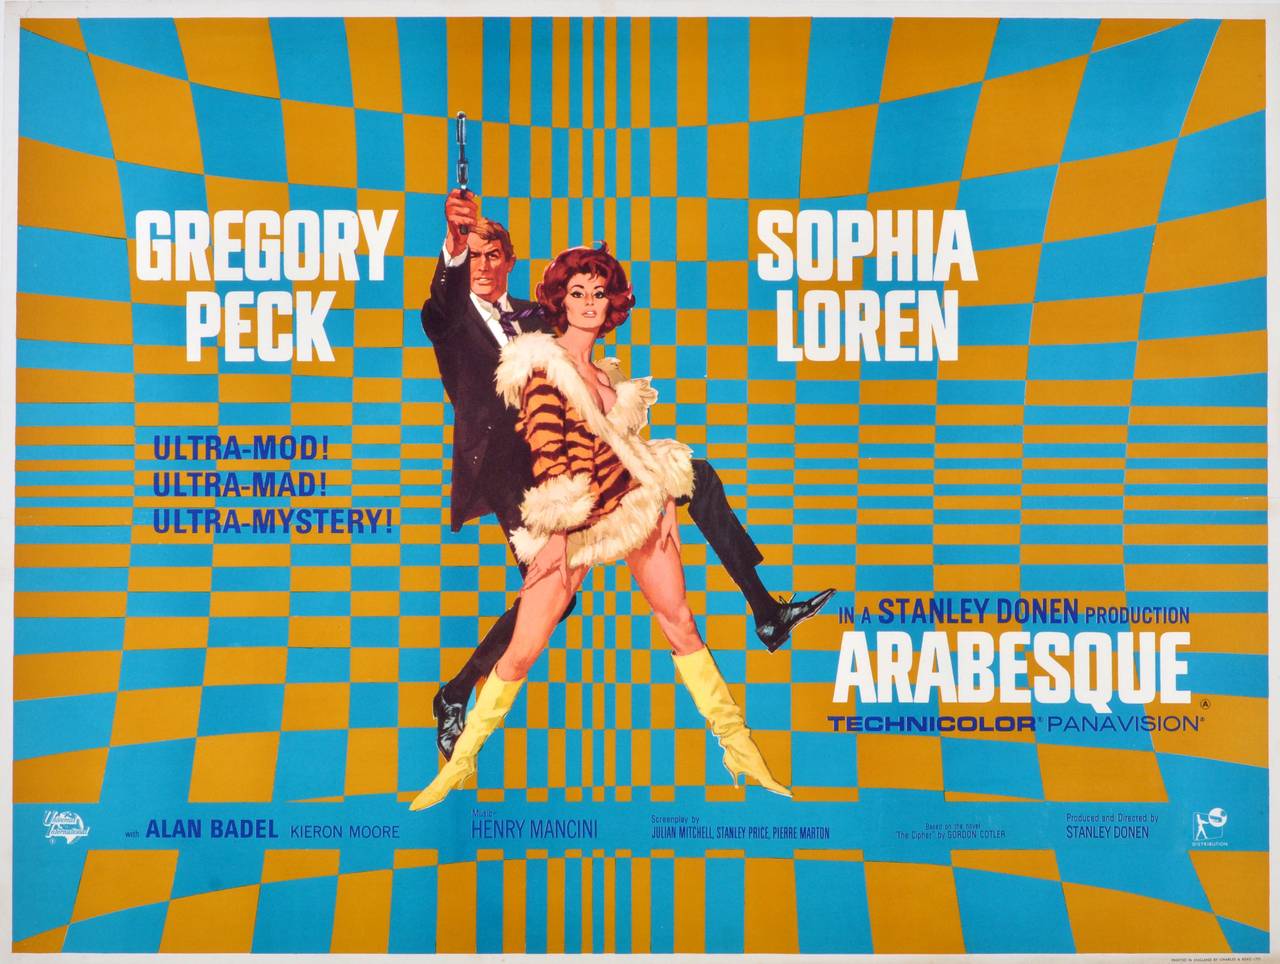 Unknown Print - Original Vintage Movie Poster For Arabesque Starring Gregory Peck & Sophia Loren